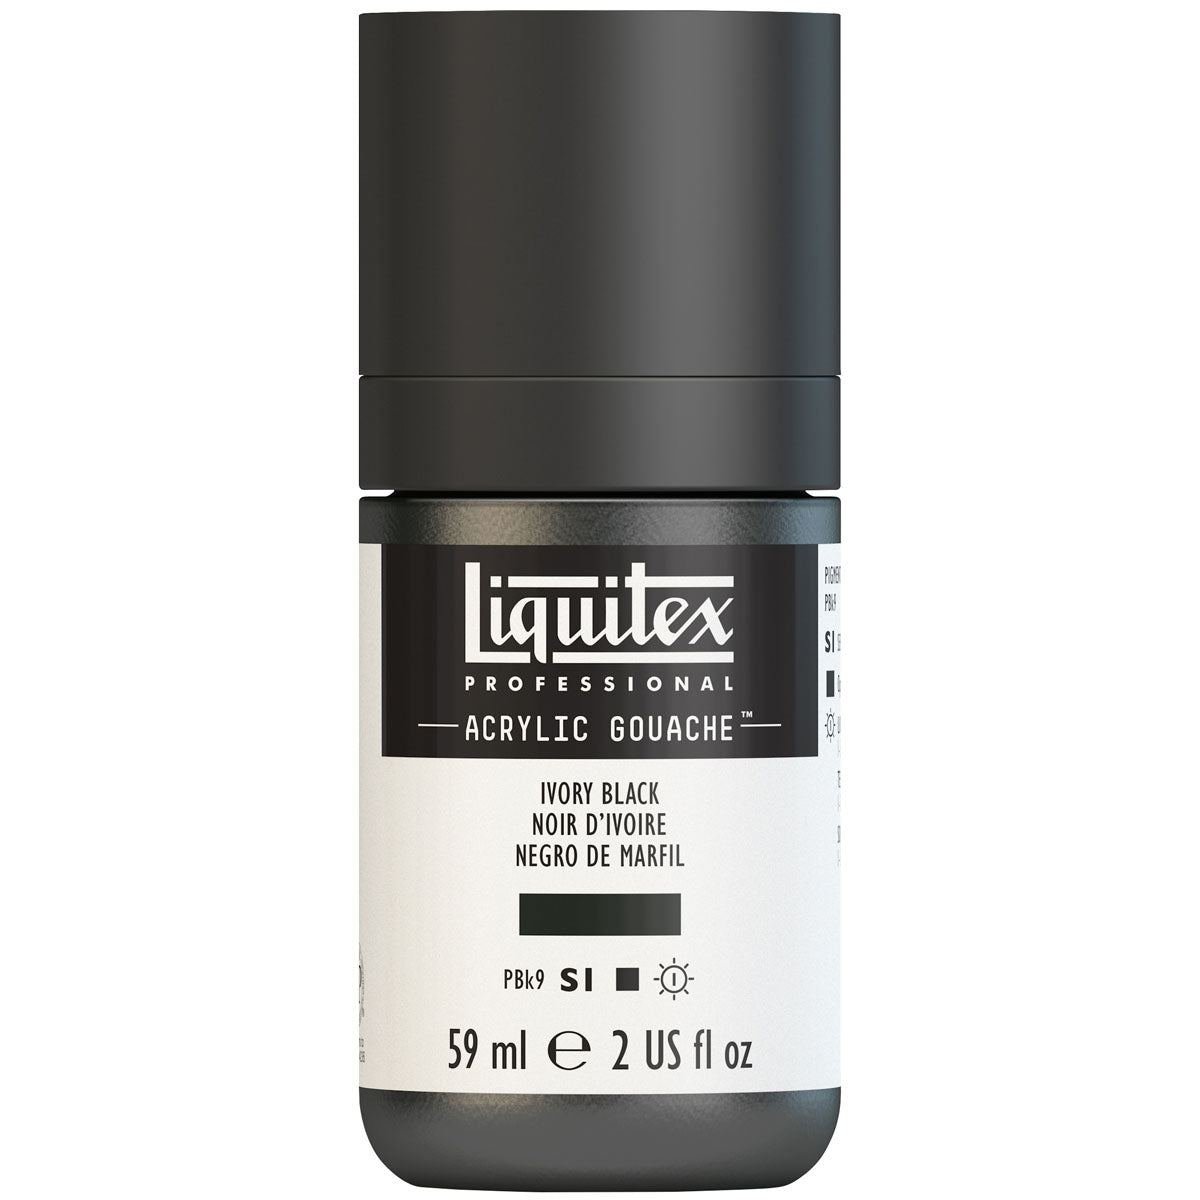 Liquitex - Acrylic Gouache 59ml S1 - Ivory Black